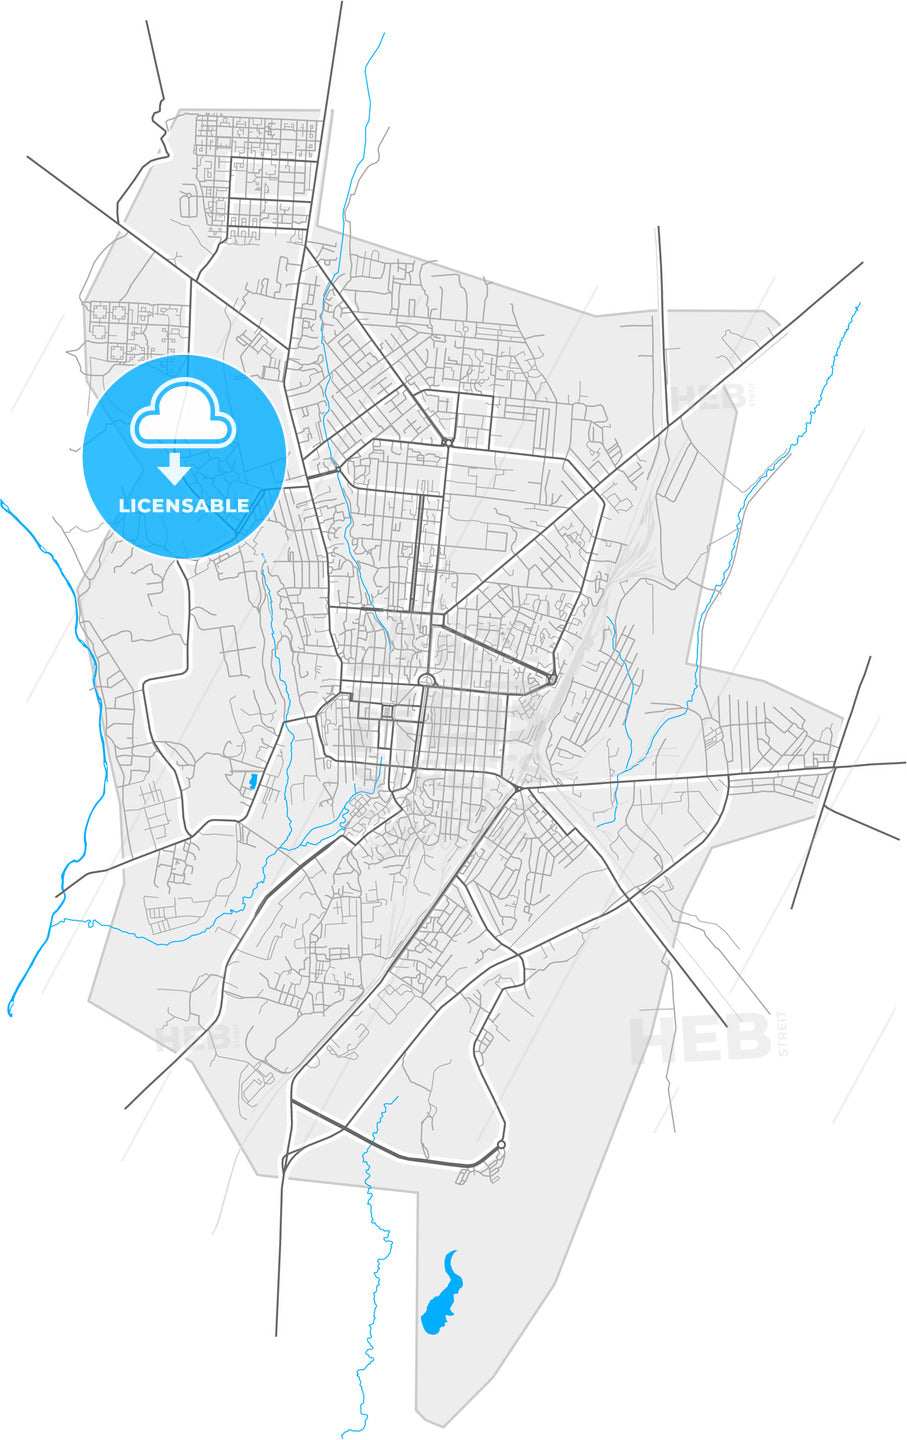 Gyumri, Shirak, Armenia, high quality vector map